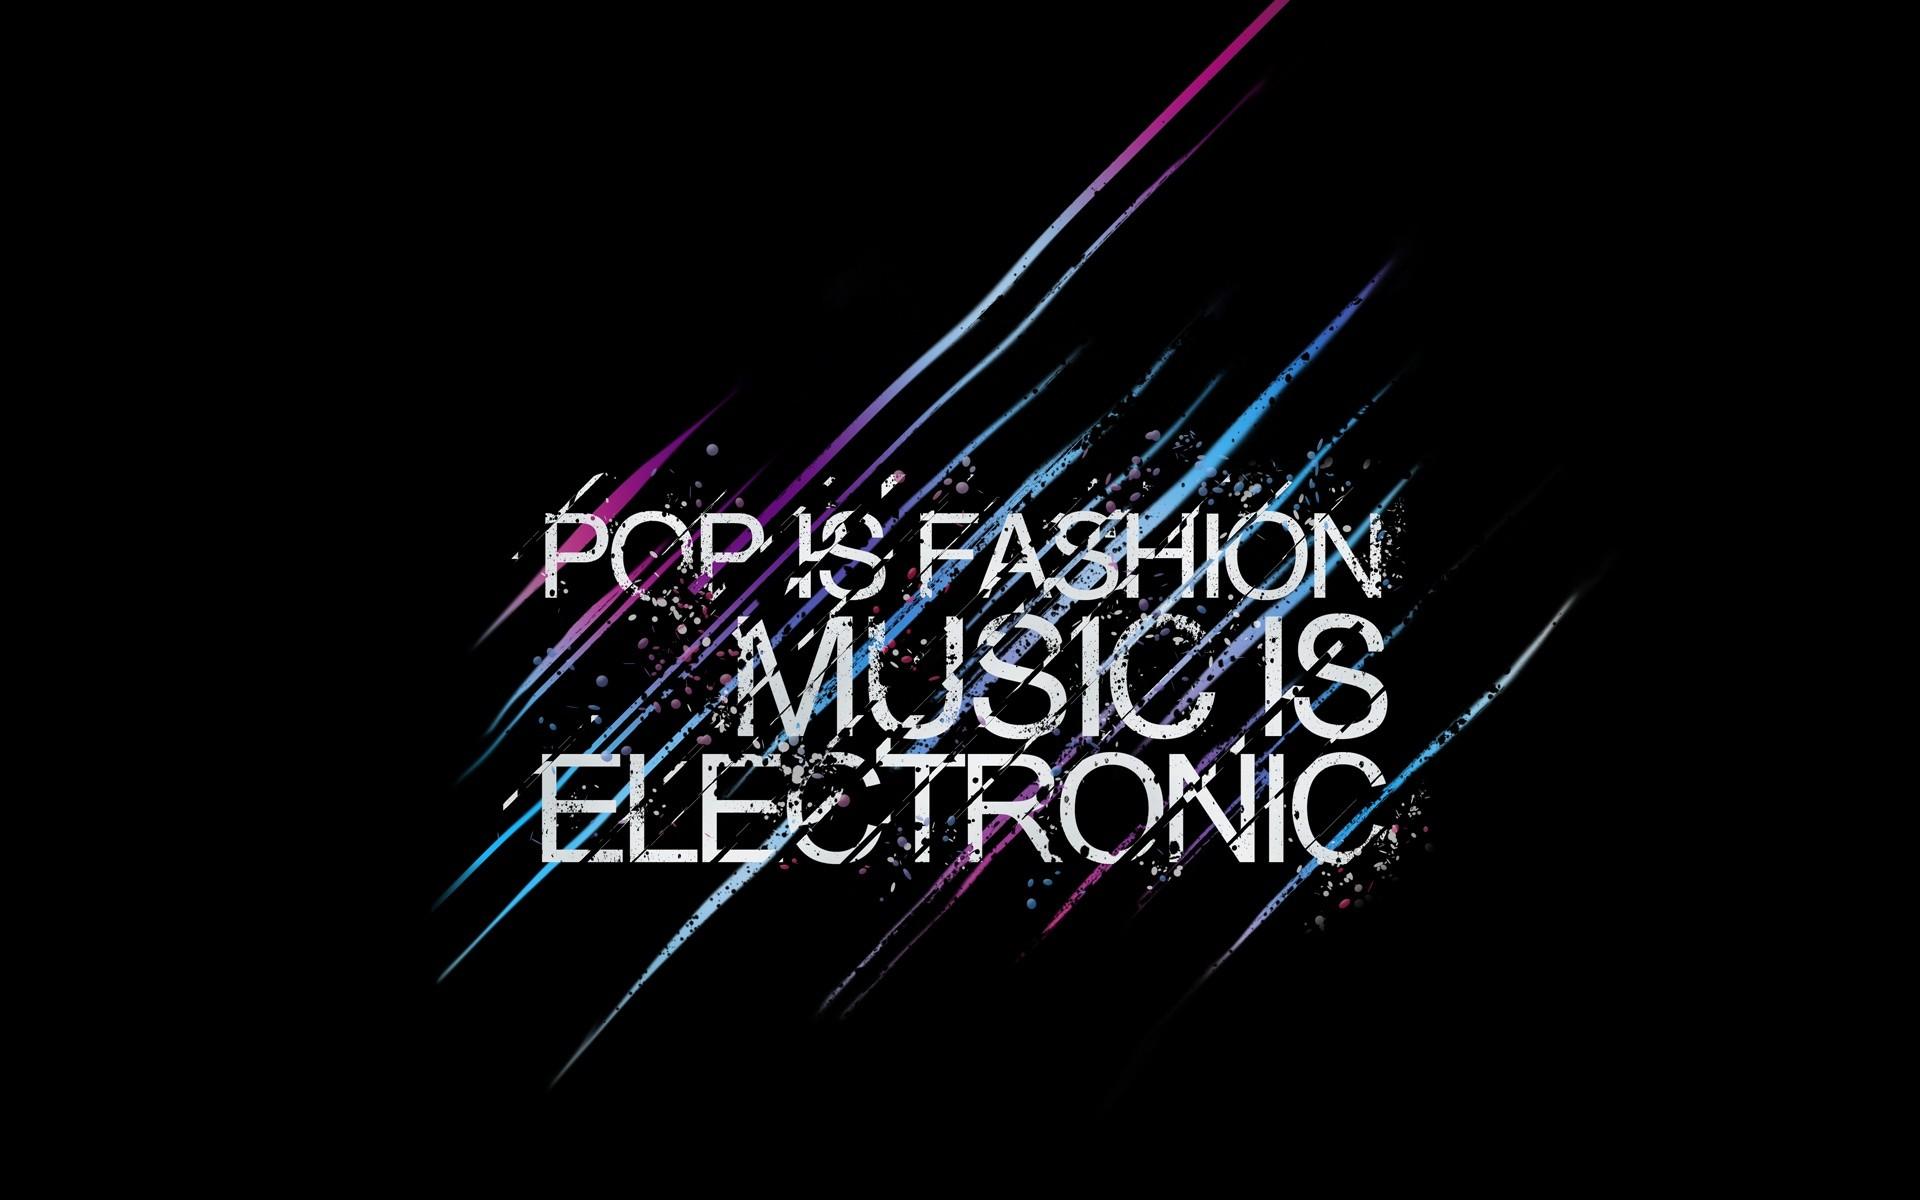 Electro Music Wallpaper